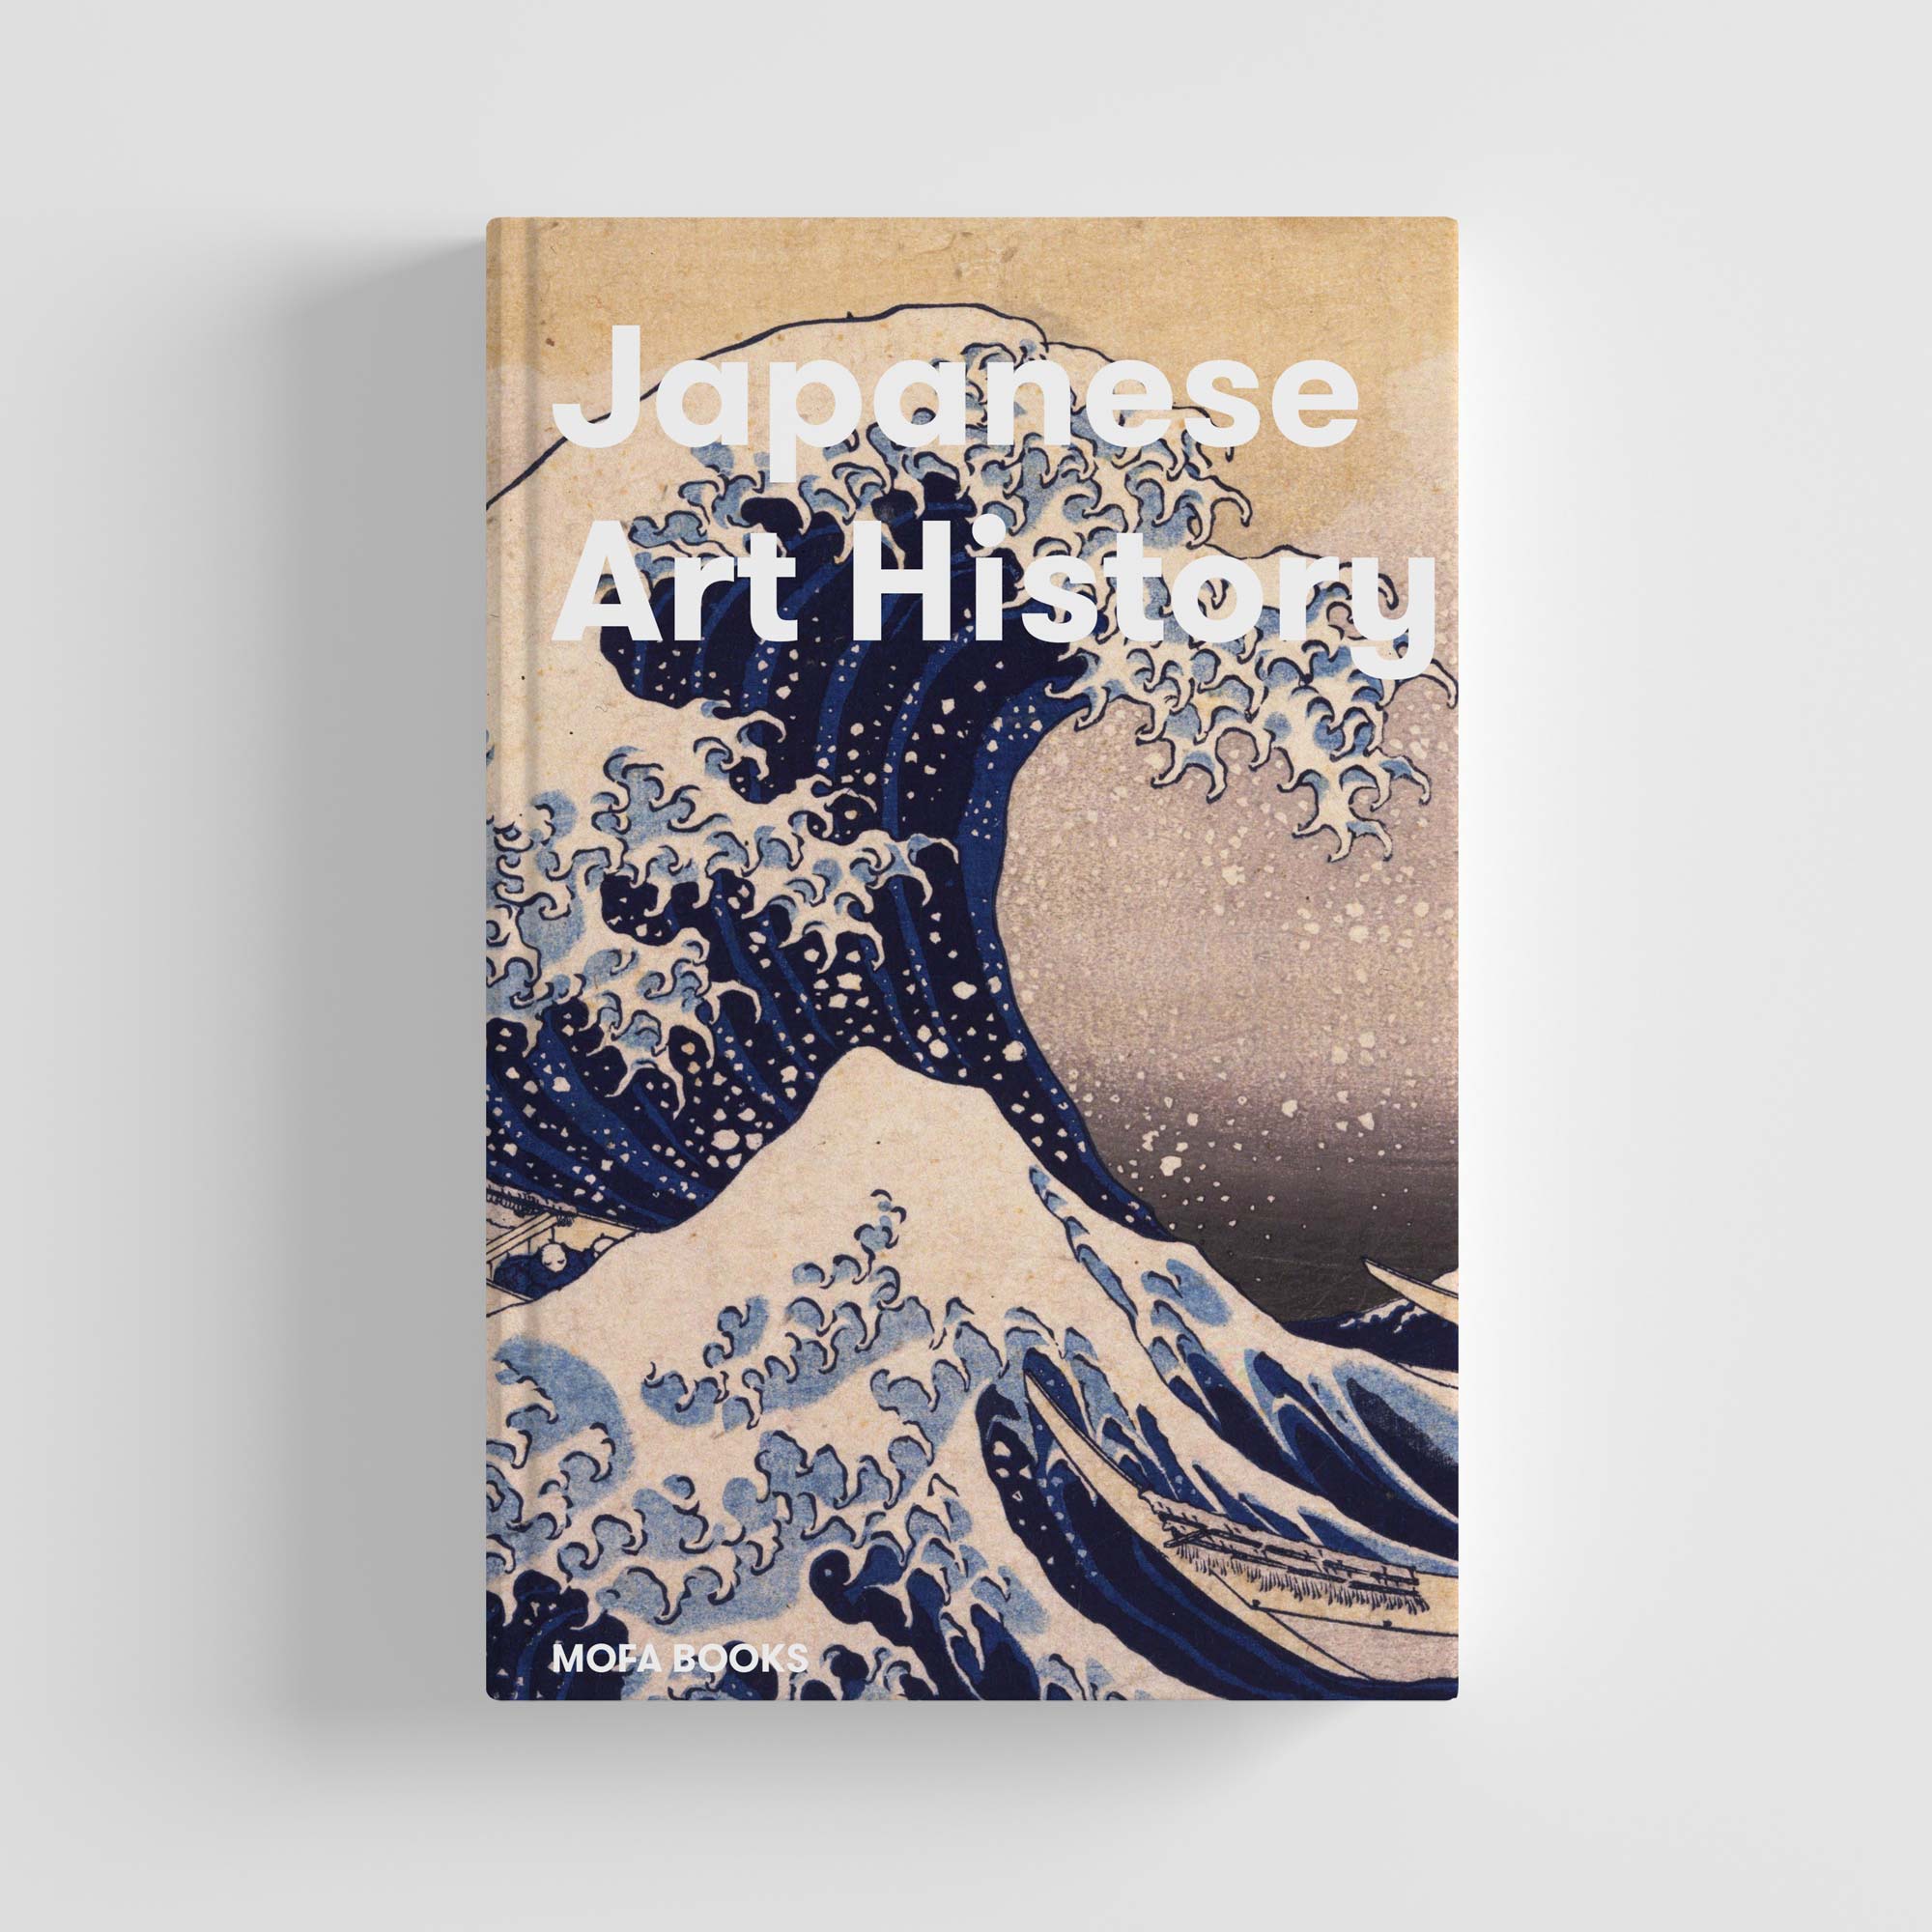 History of Japanese Art [Book]